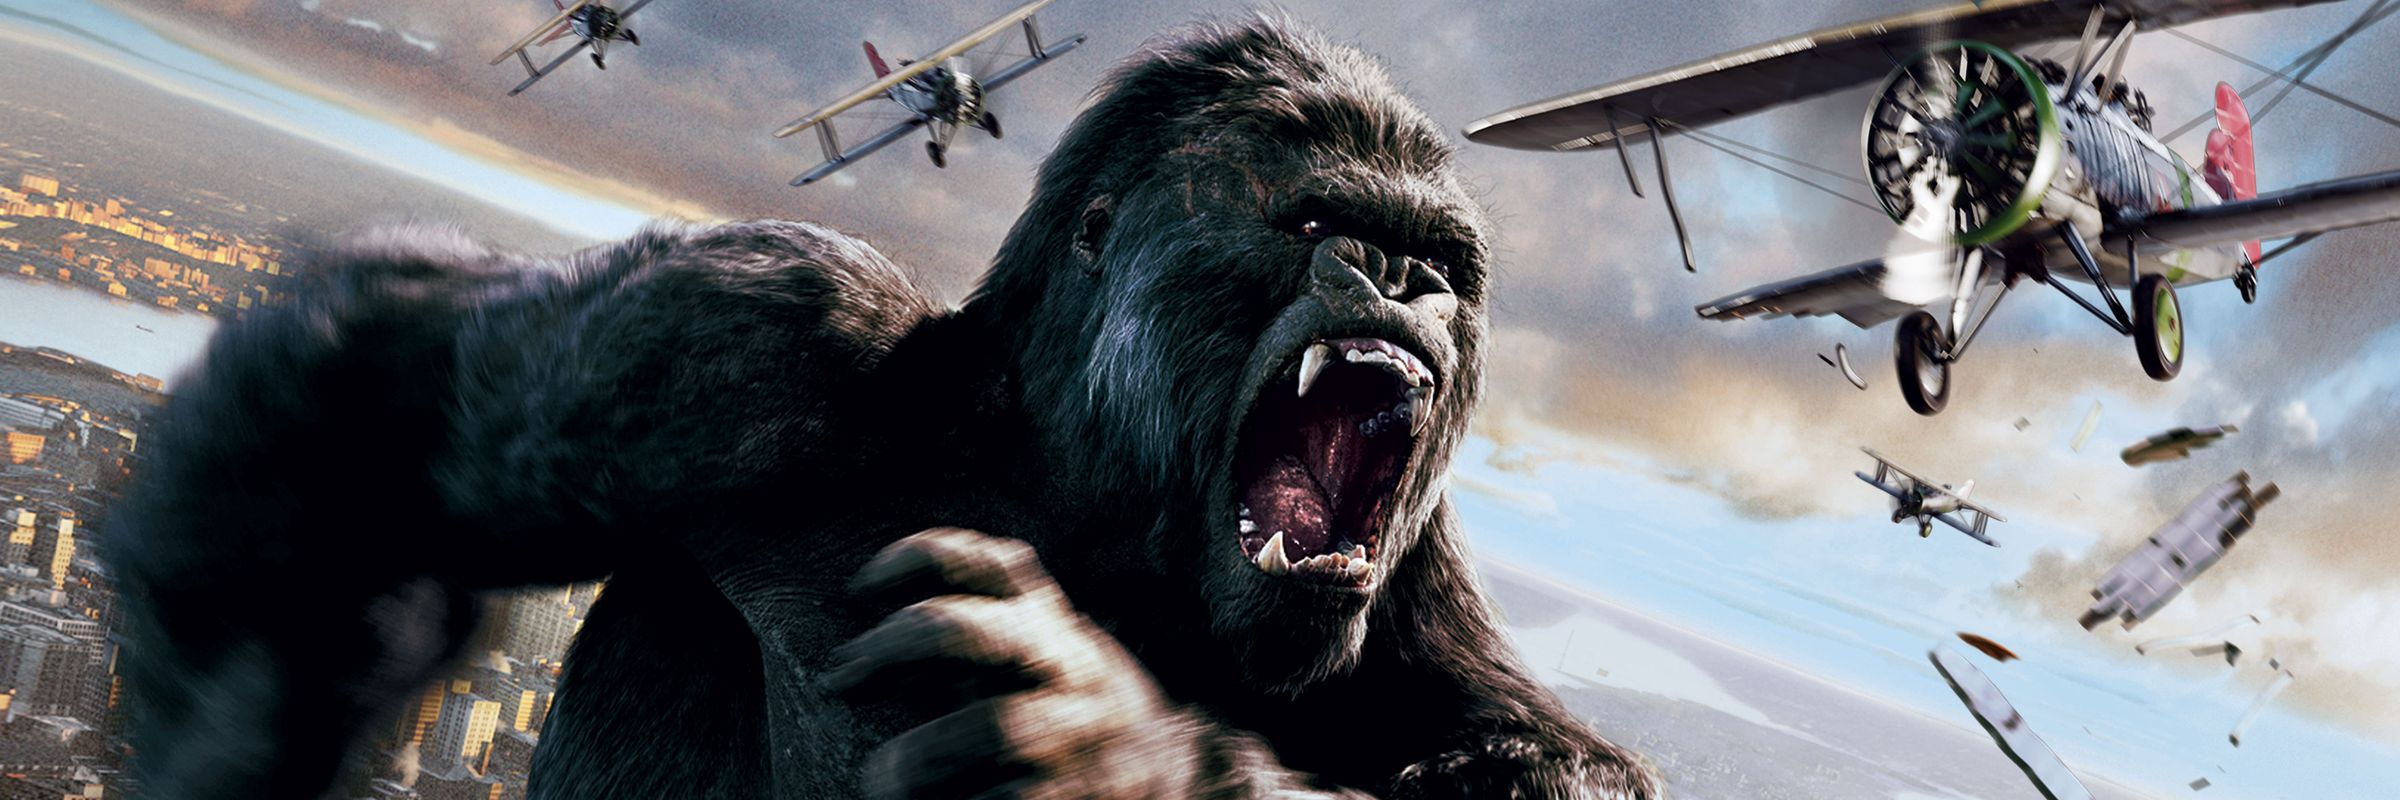 King Kong Full Movie Movies Anywhere